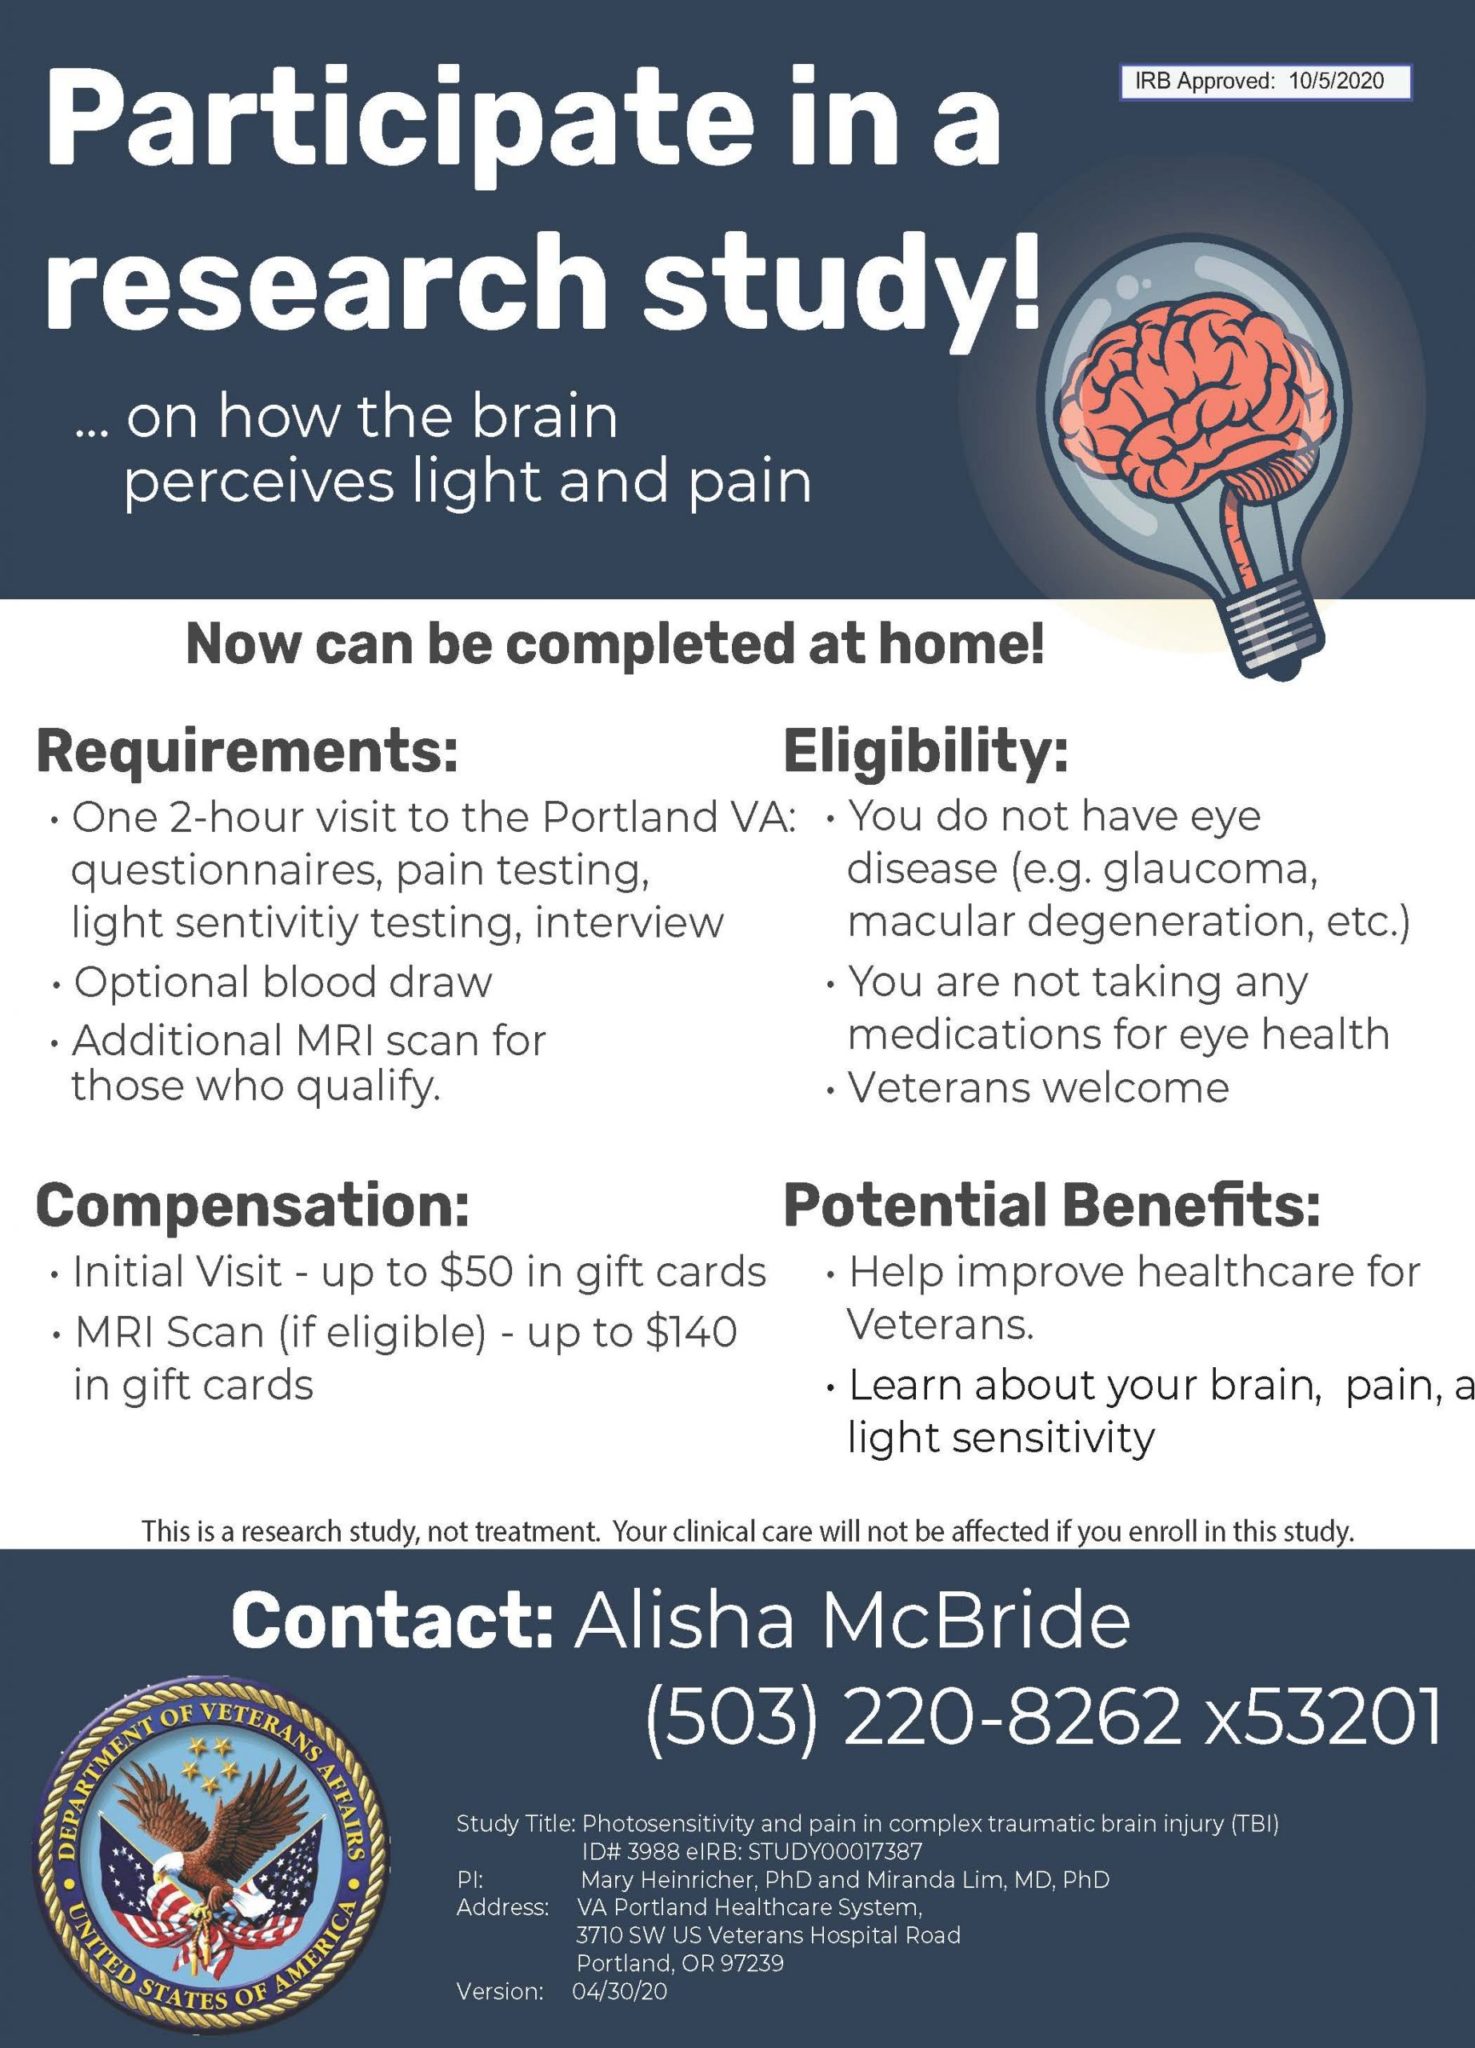 Sleep study recruitment flyer for Photosensitivity and Pain Study